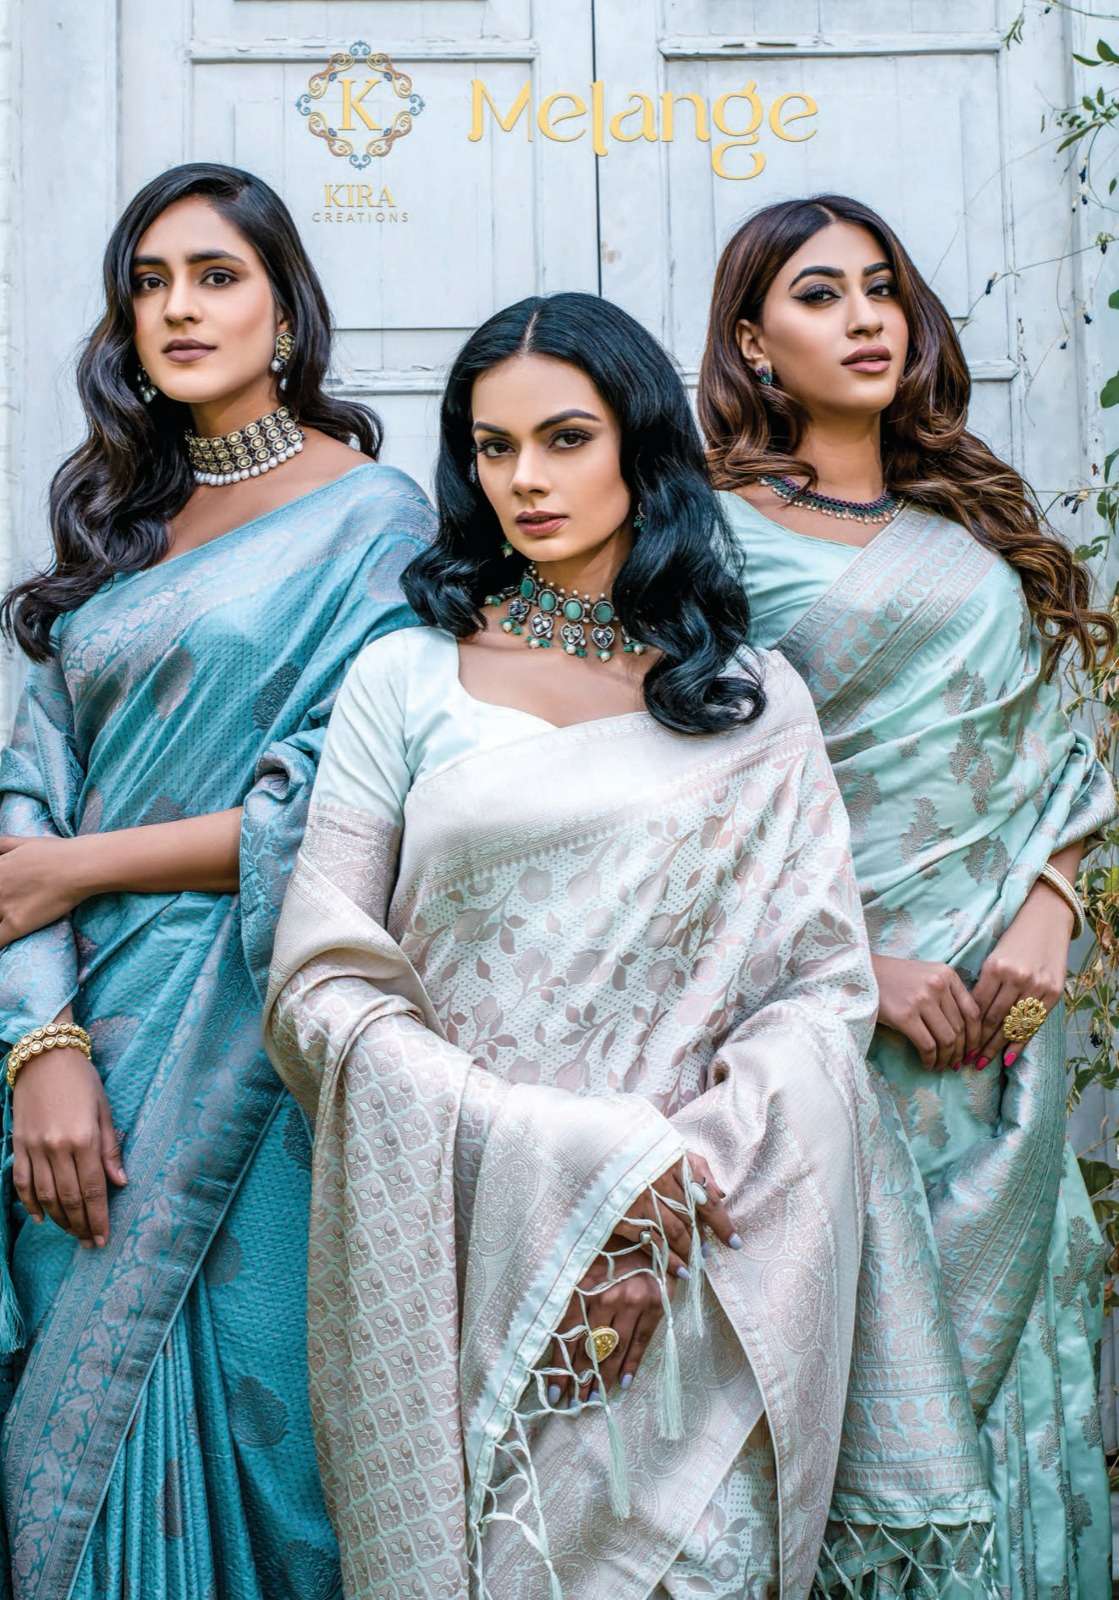 kira creation melange 8001-8006 series festive wear banarasi silk sarees